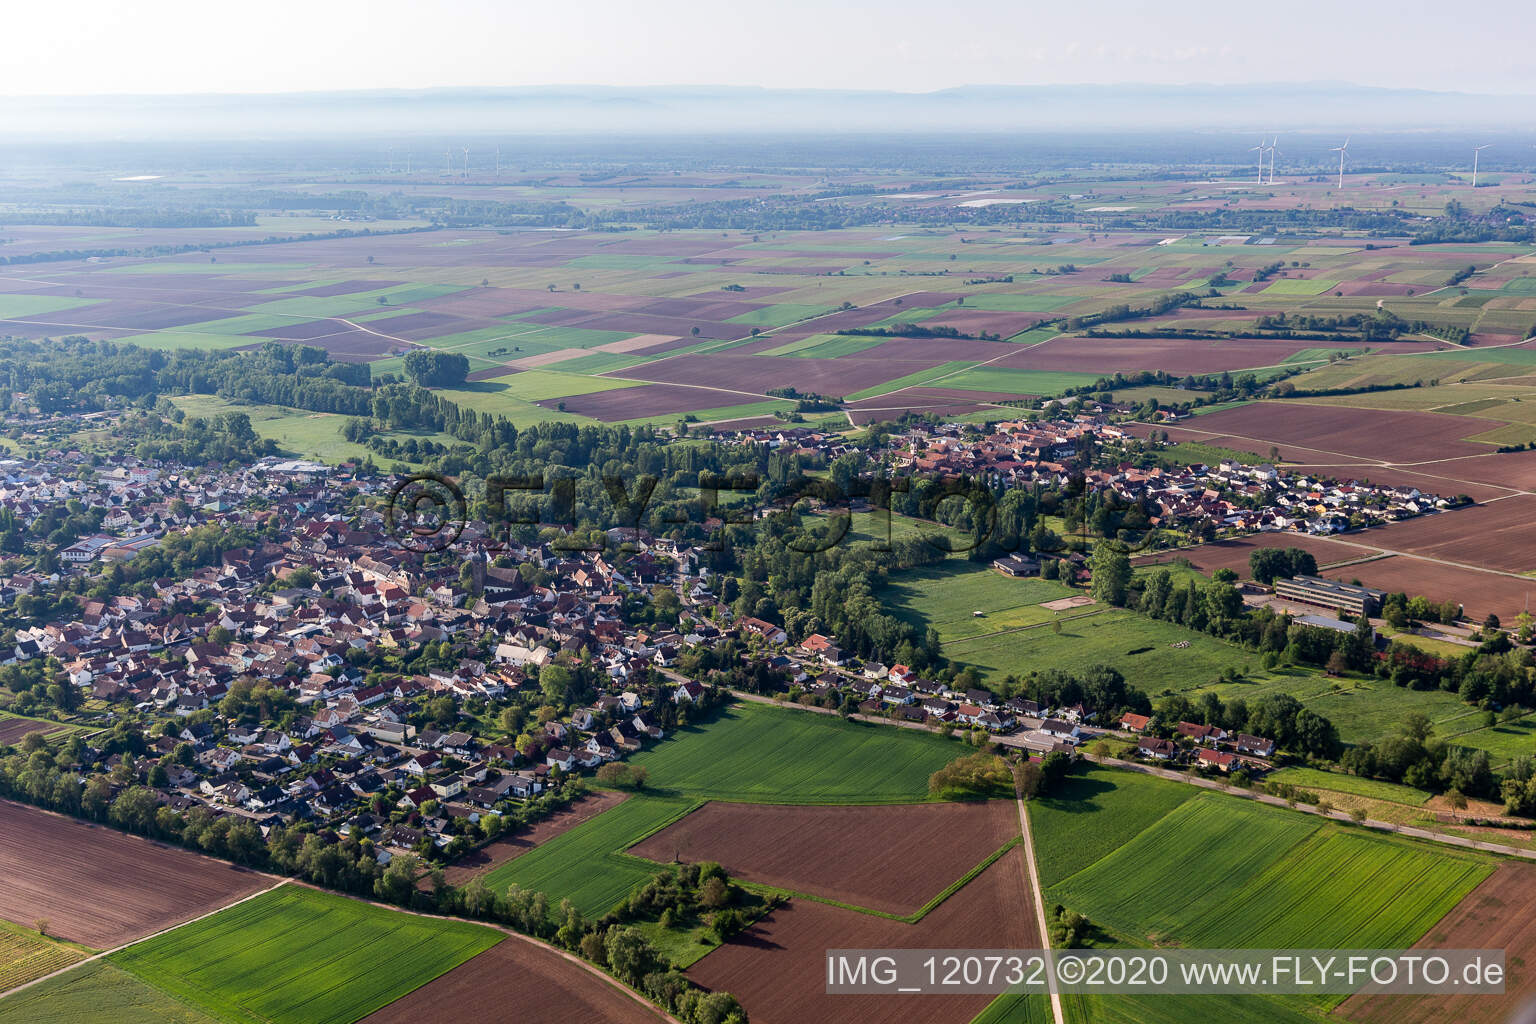 District Billigheim in Billigheim-Ingenheim in the state Rhineland-Palatinate, Germany from the plane